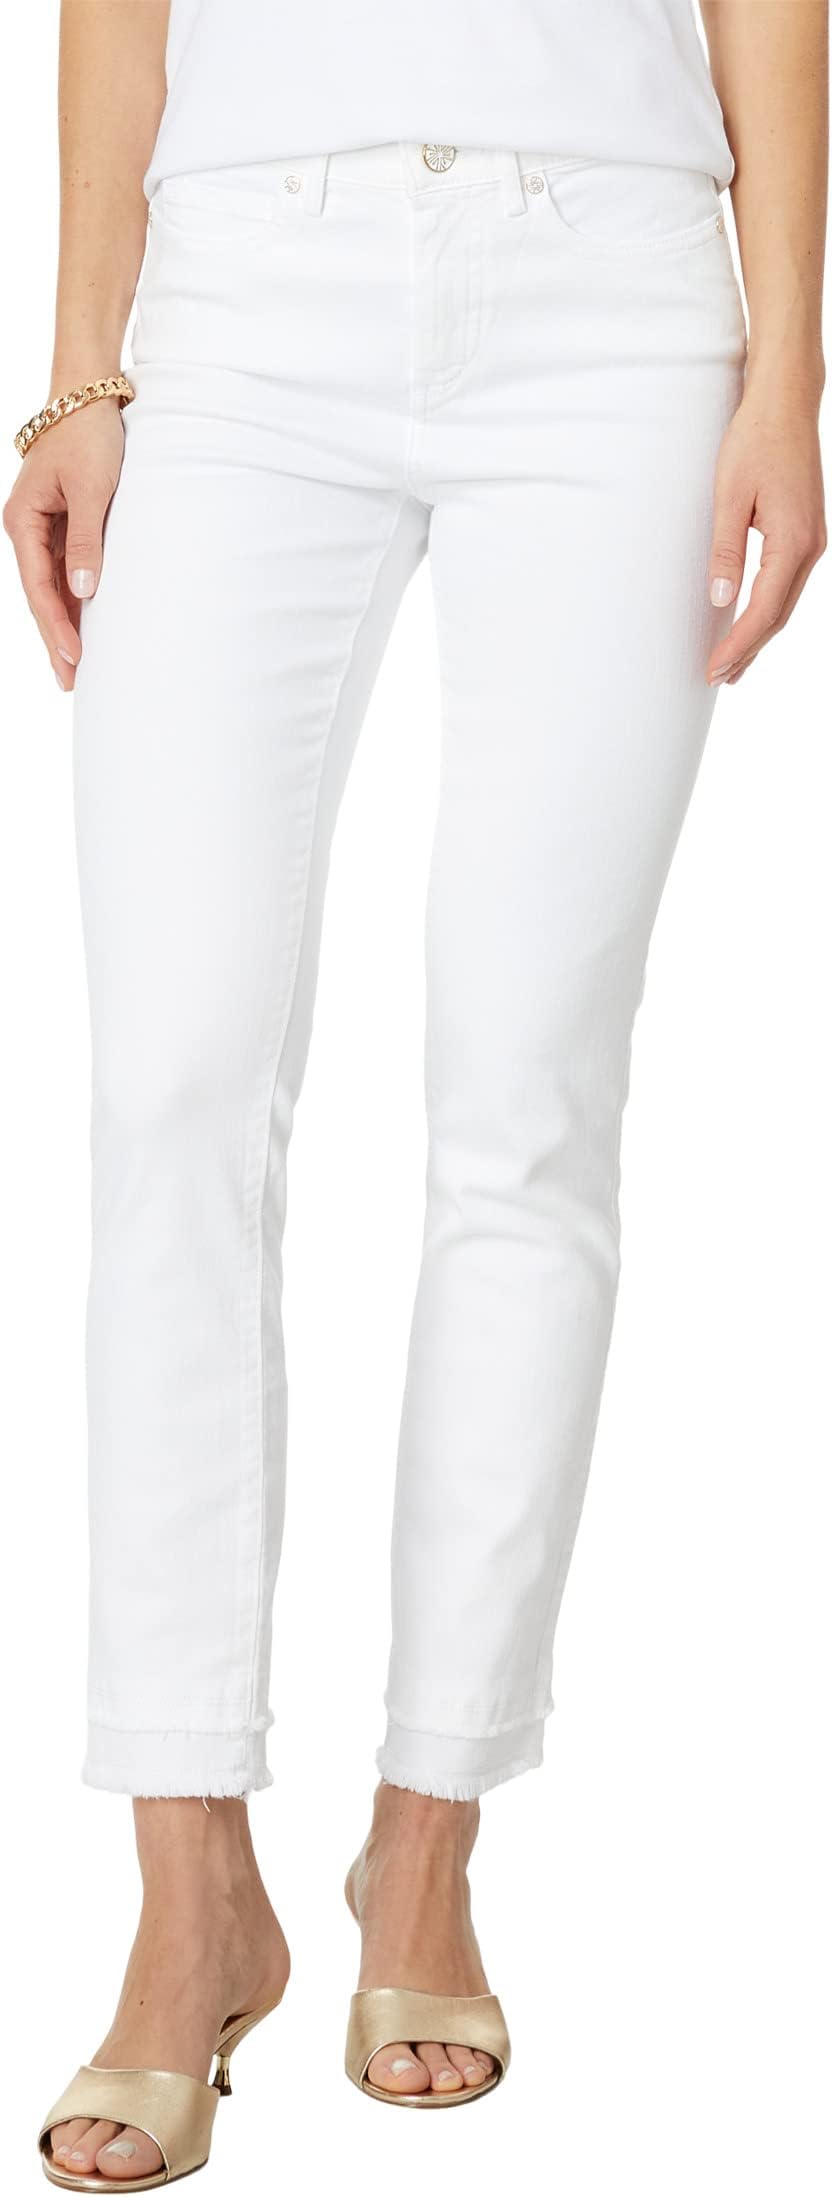 south palm resort maldives Джинсы South Ocean High-Rise Skinny Jeans in Resort White Lilly Pulitzer, цвет Resort White